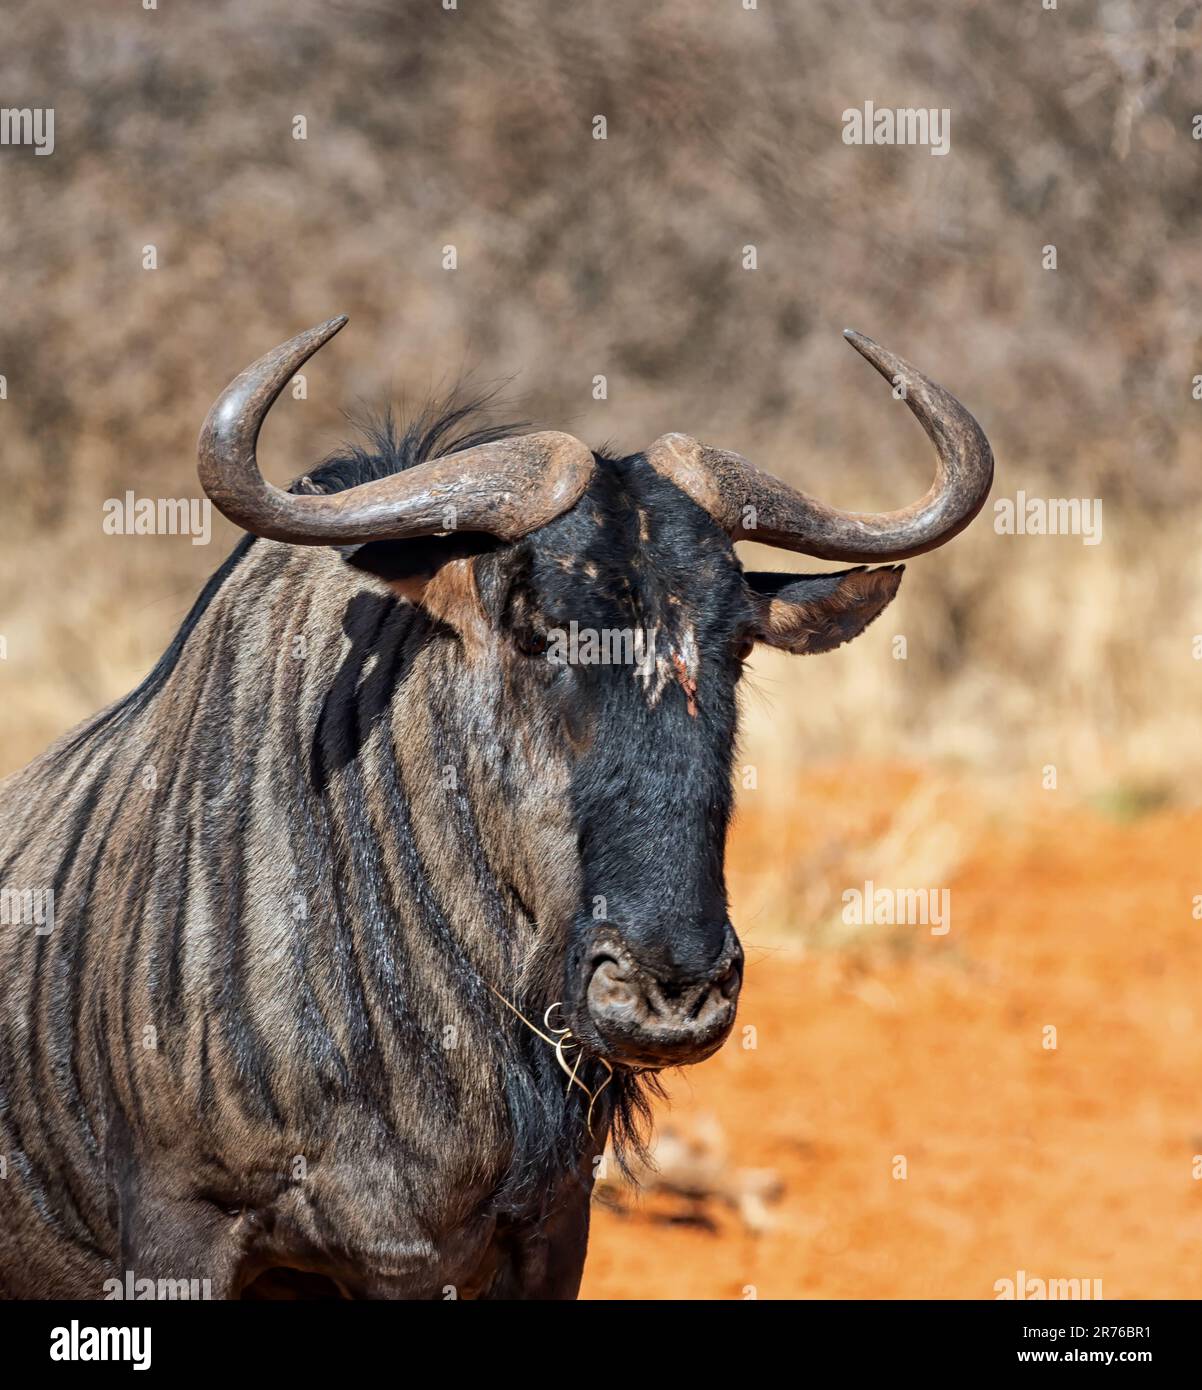 Blue Wildebeest antelope in Southern African Kalahari savannah Stock Photo